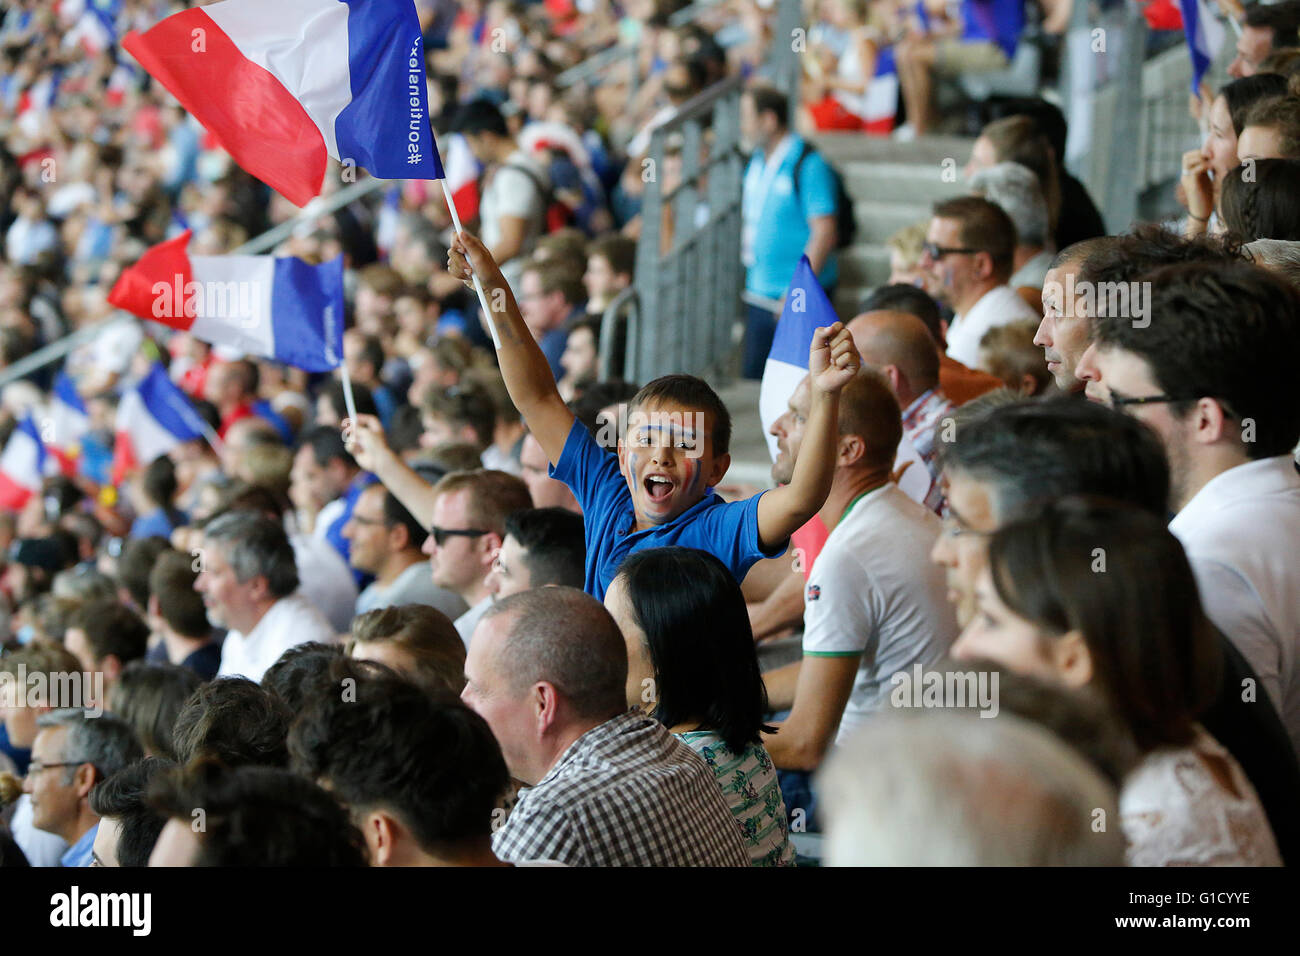 Rugby match at the Stade de France. Spectators. Saint-Denis. France. Stock Photo